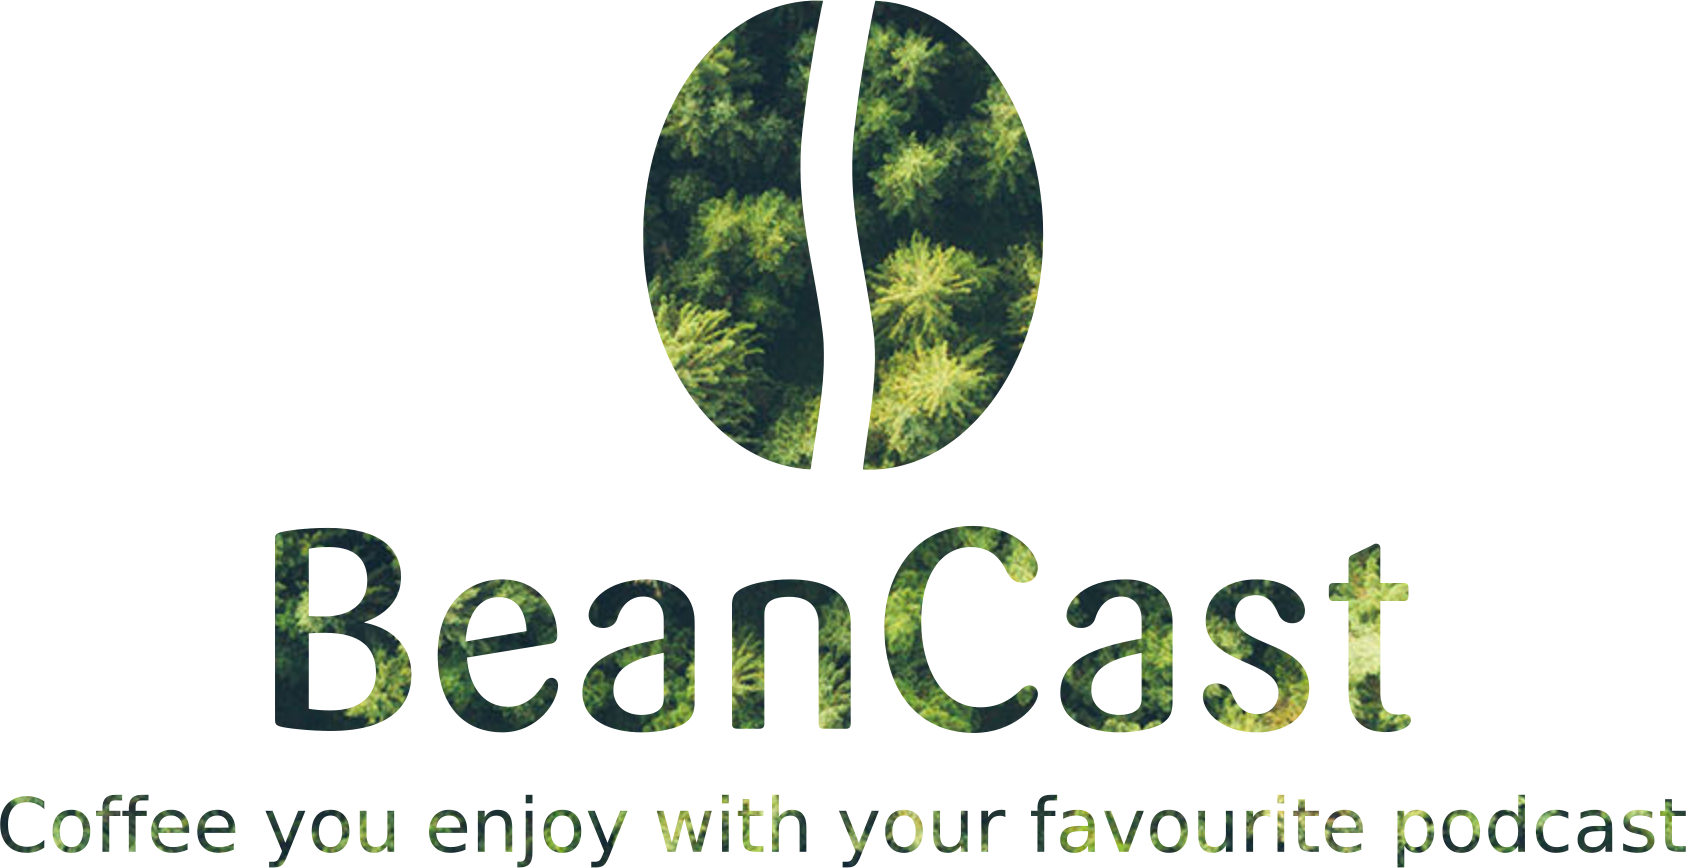 Beancast